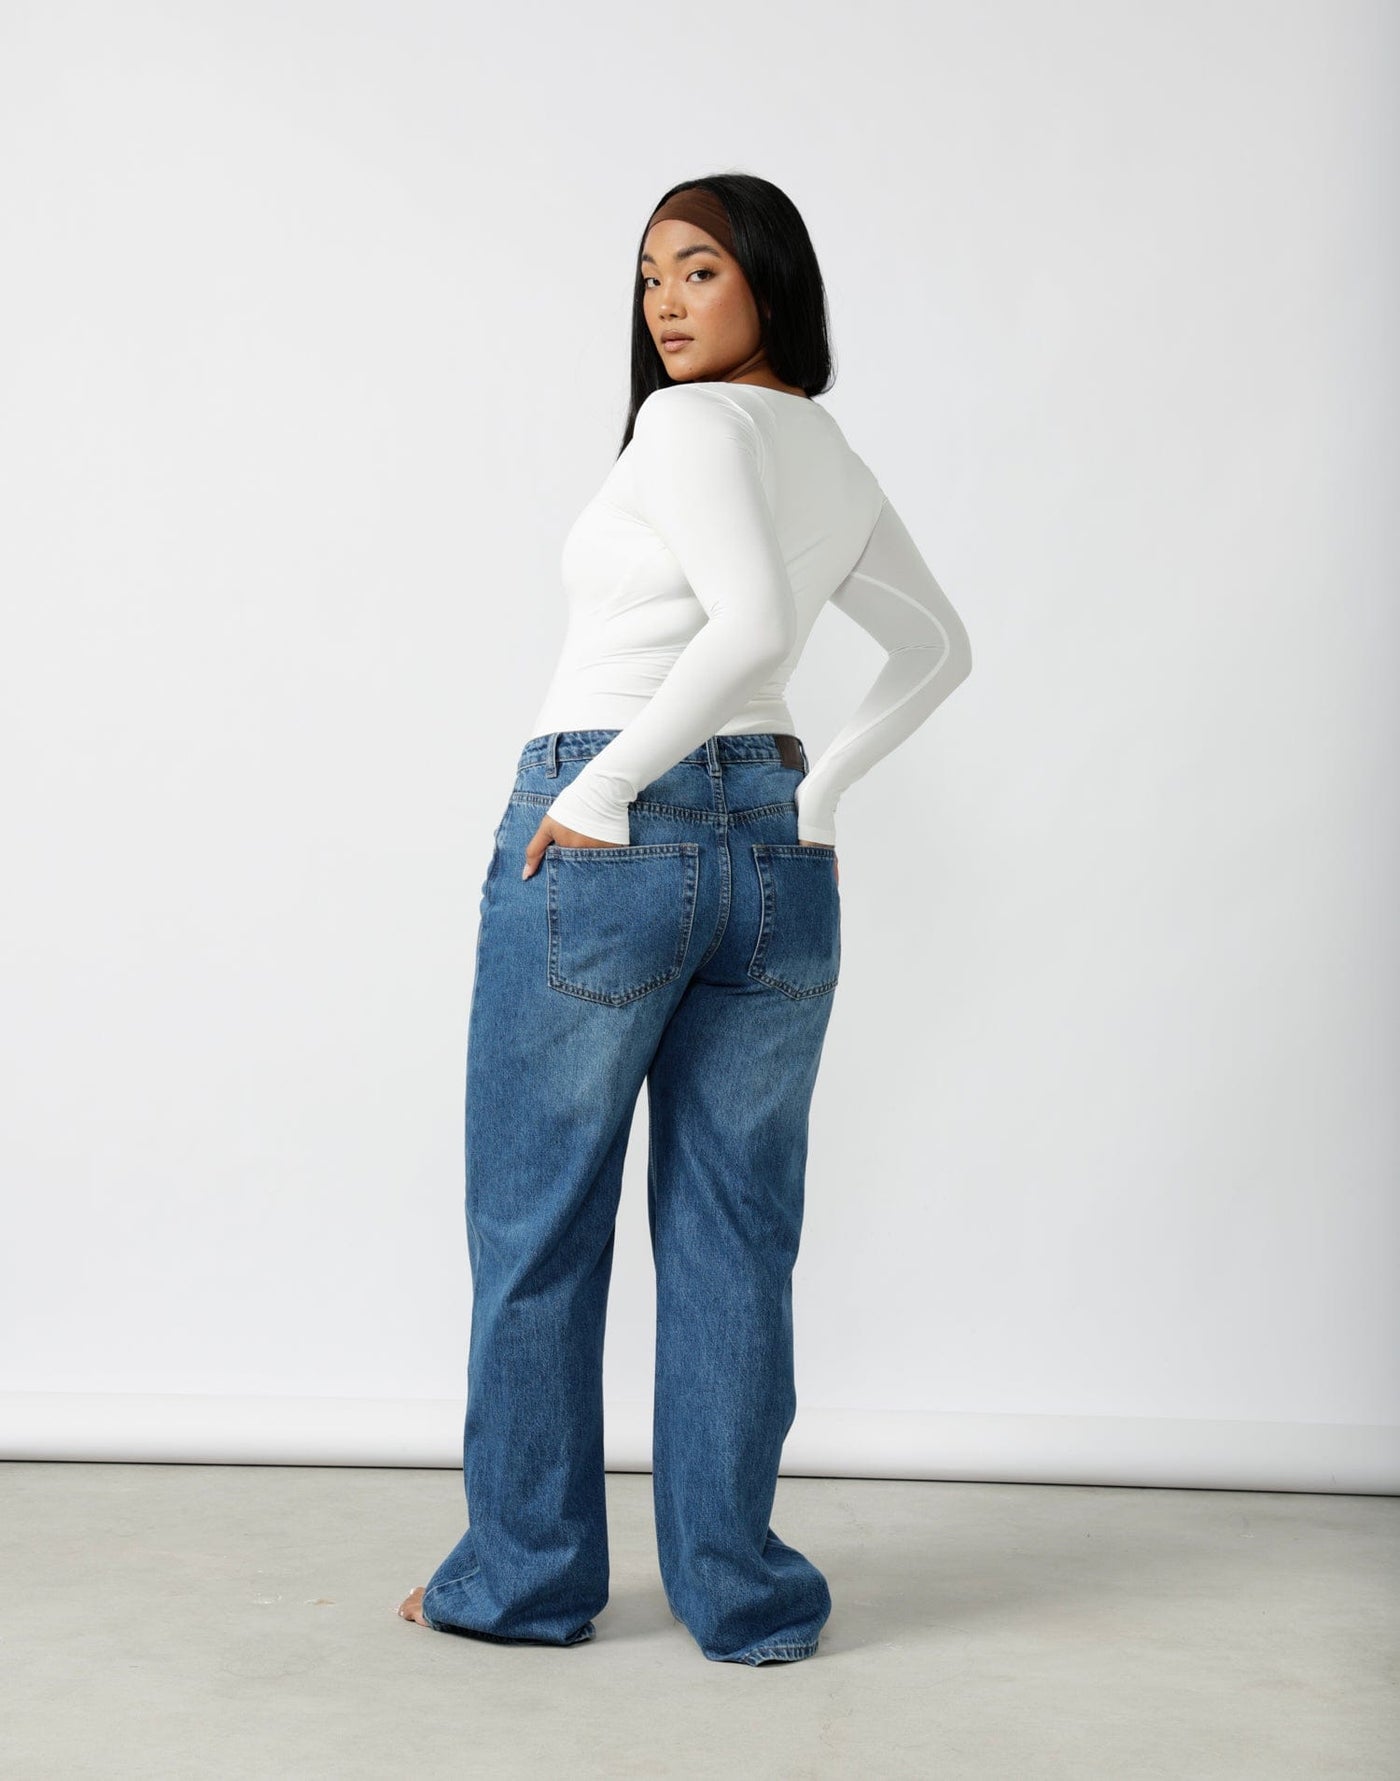 Easton Jeans (Mid Wash) - Mid Wash Denim Low Rise Jeans - Women's Pants - Charcoal Clothing